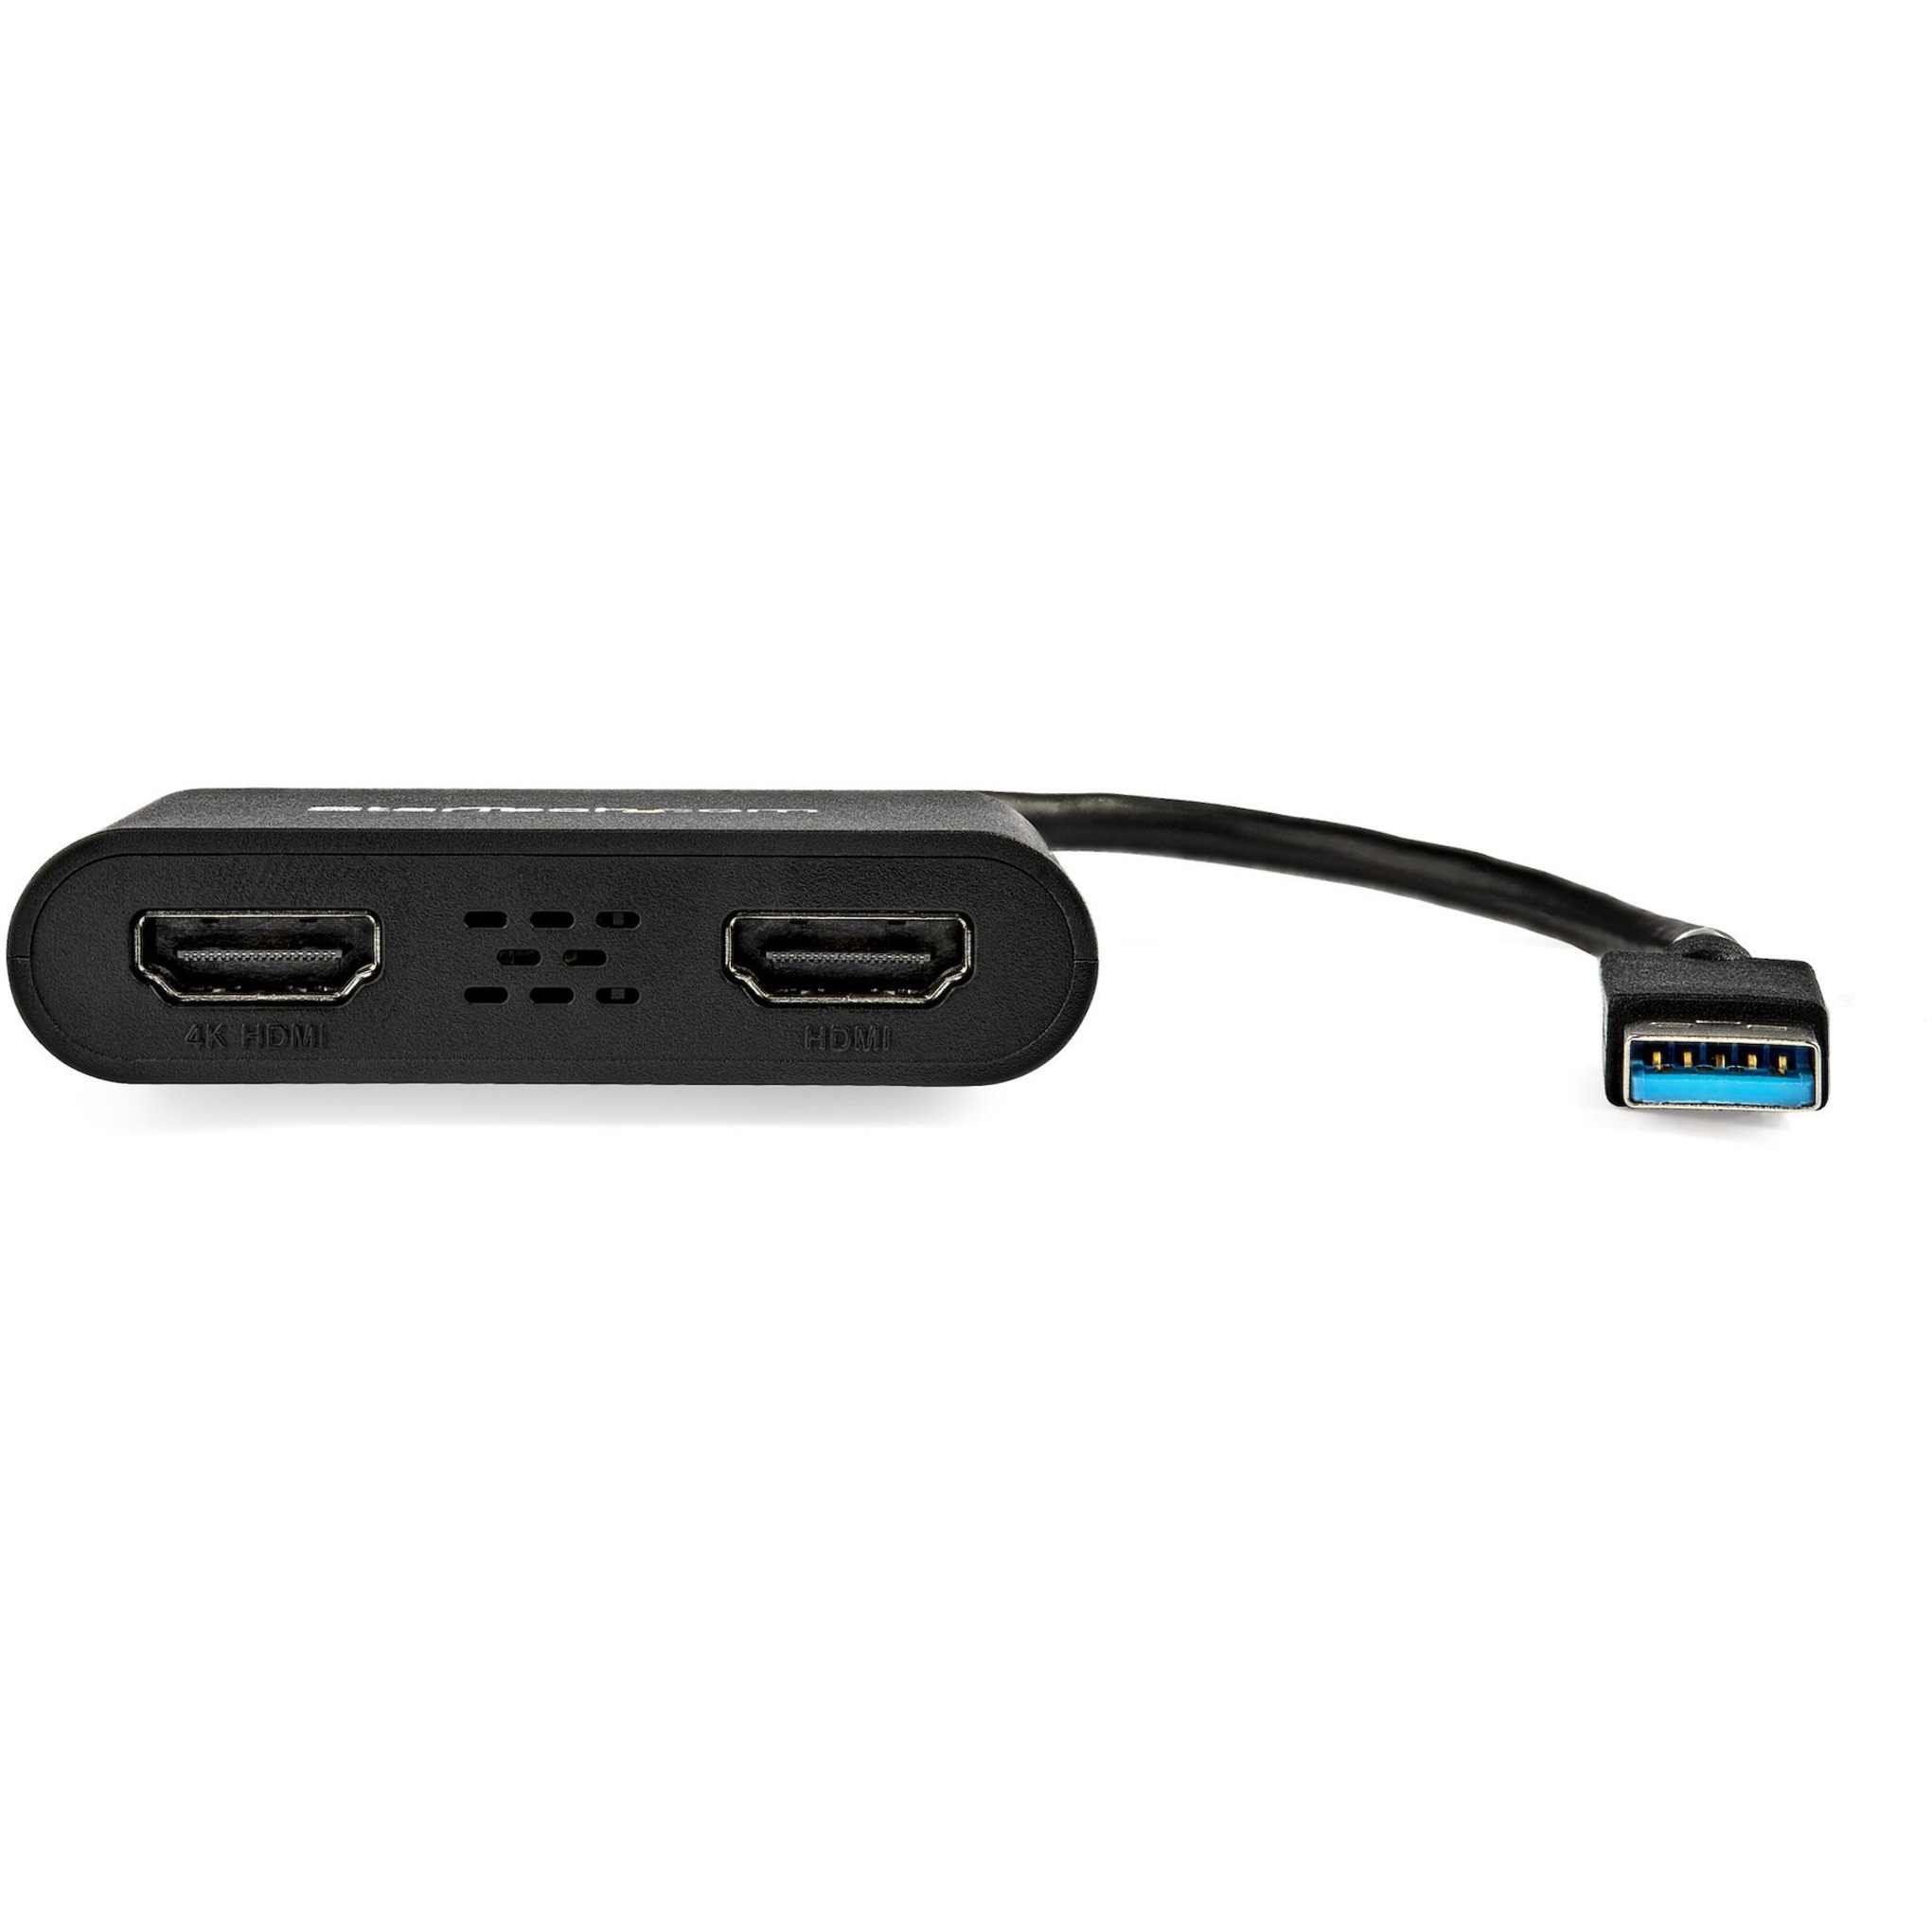 Generic Adaptateur USB C Vers HDMI 4K 30 Hz / USB 3.0 / USB 3.1